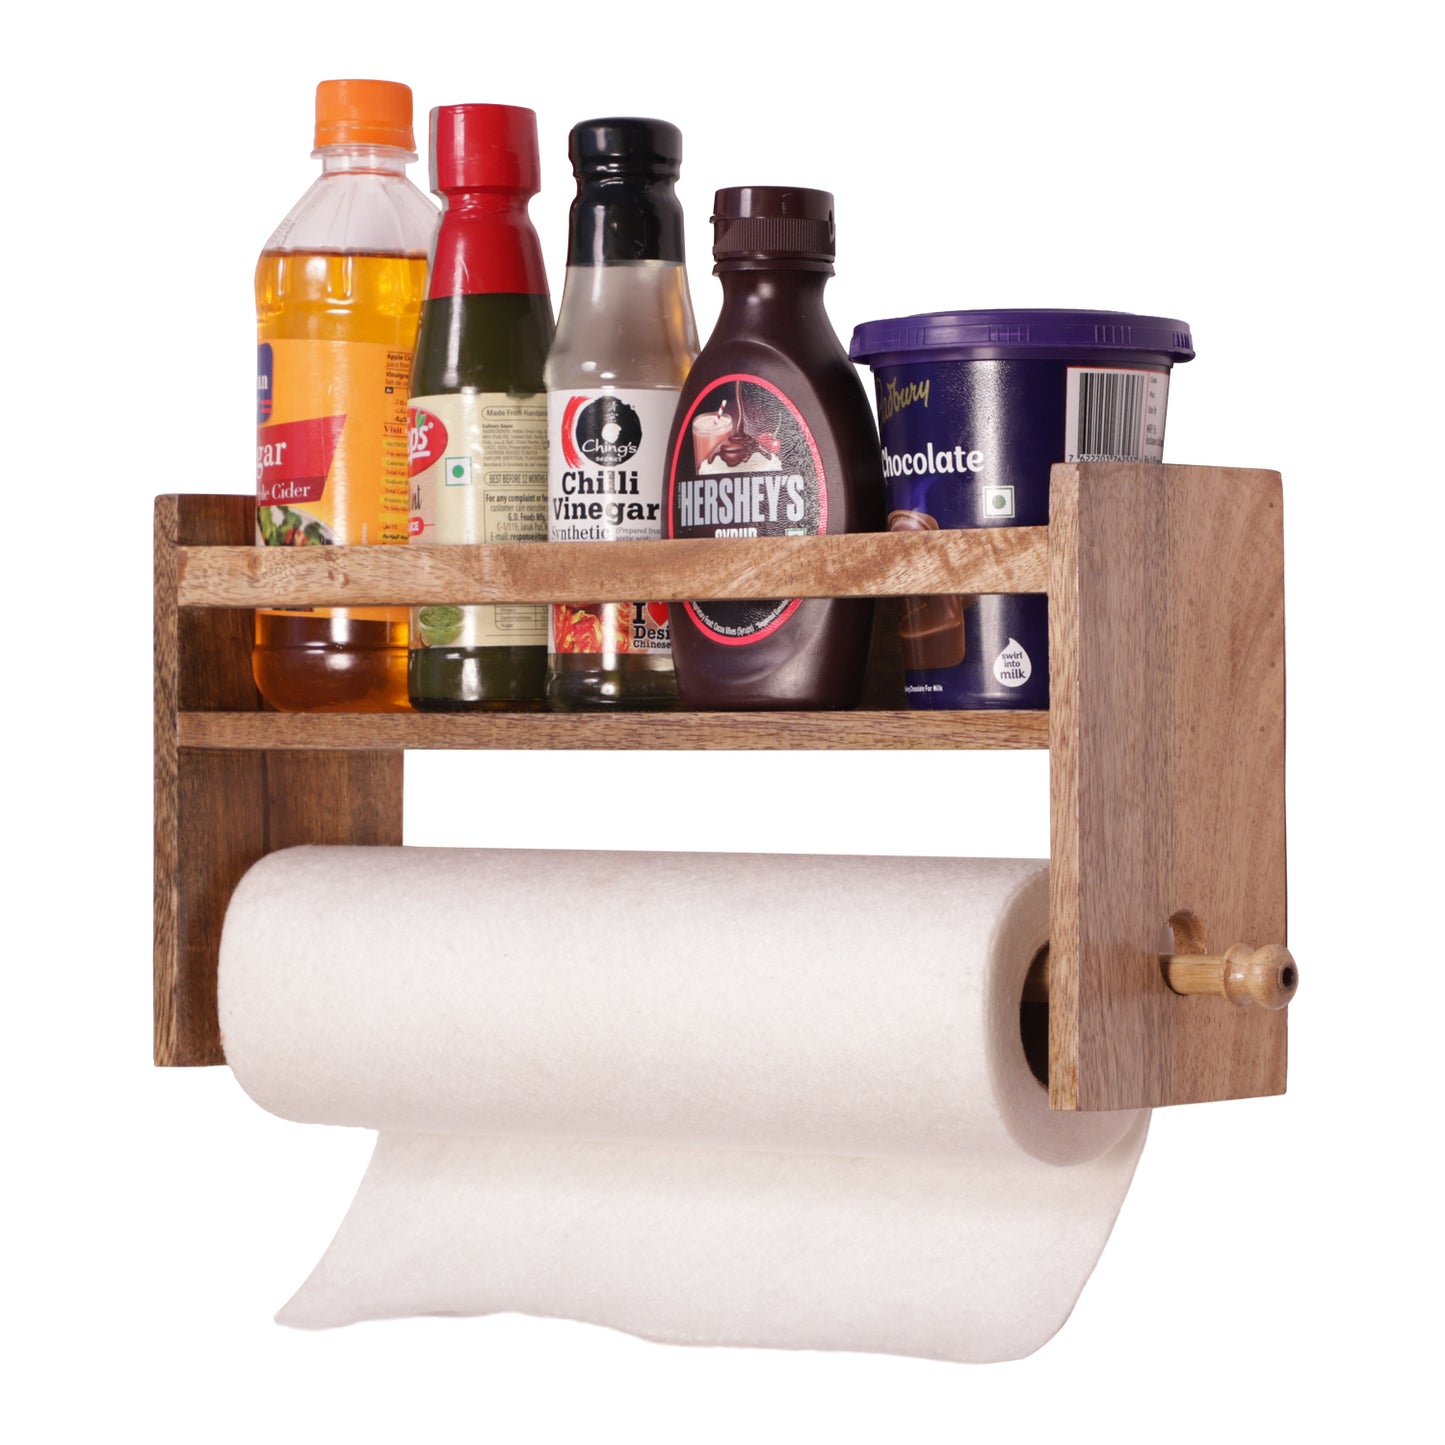 The Weaver's Nest Wooden Towel Holder/Rack with Shelf for Kitchen, Restaurants, Hotels and Washroom